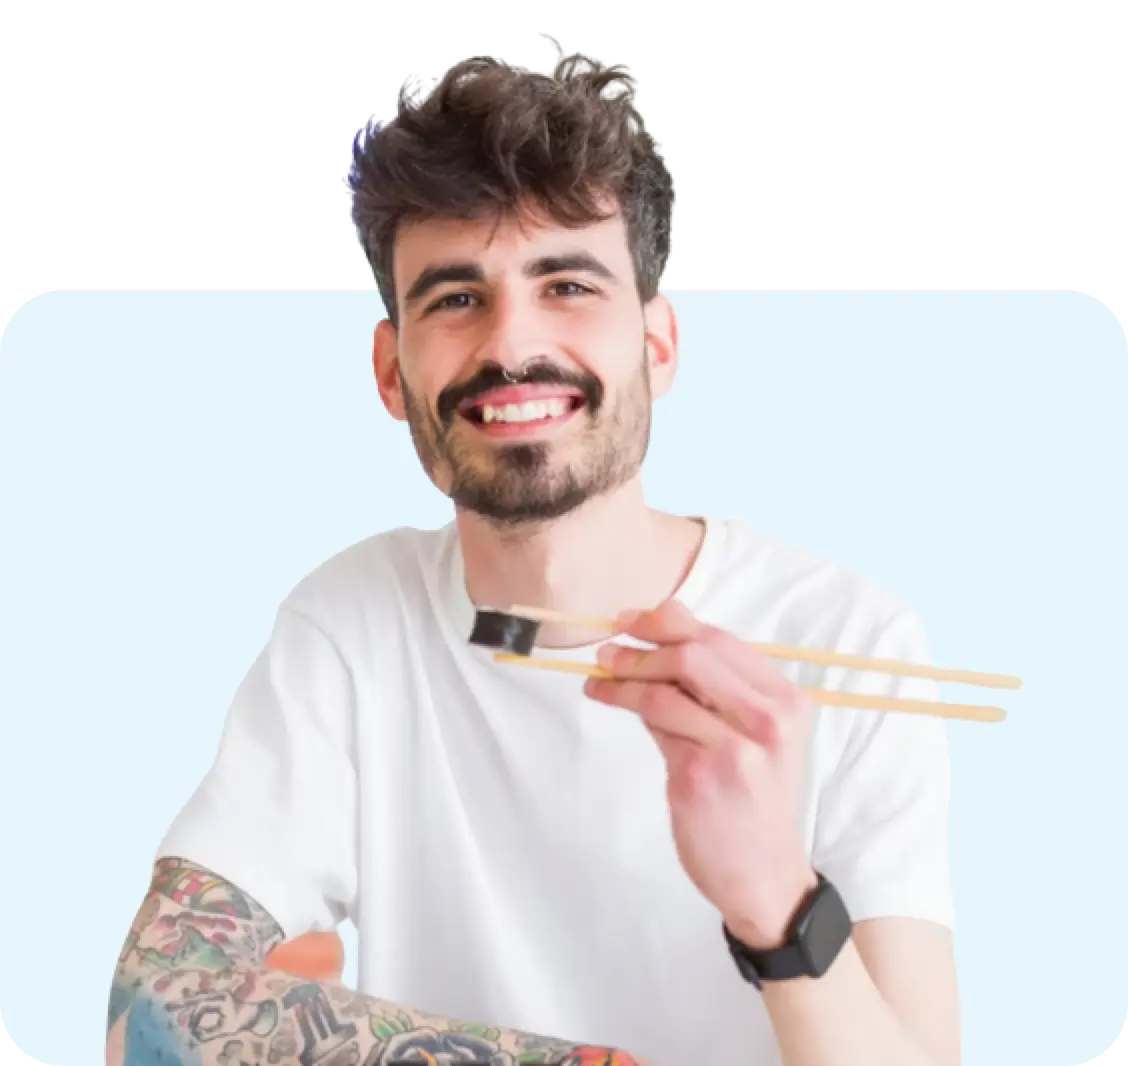 Man eating with chopsticks